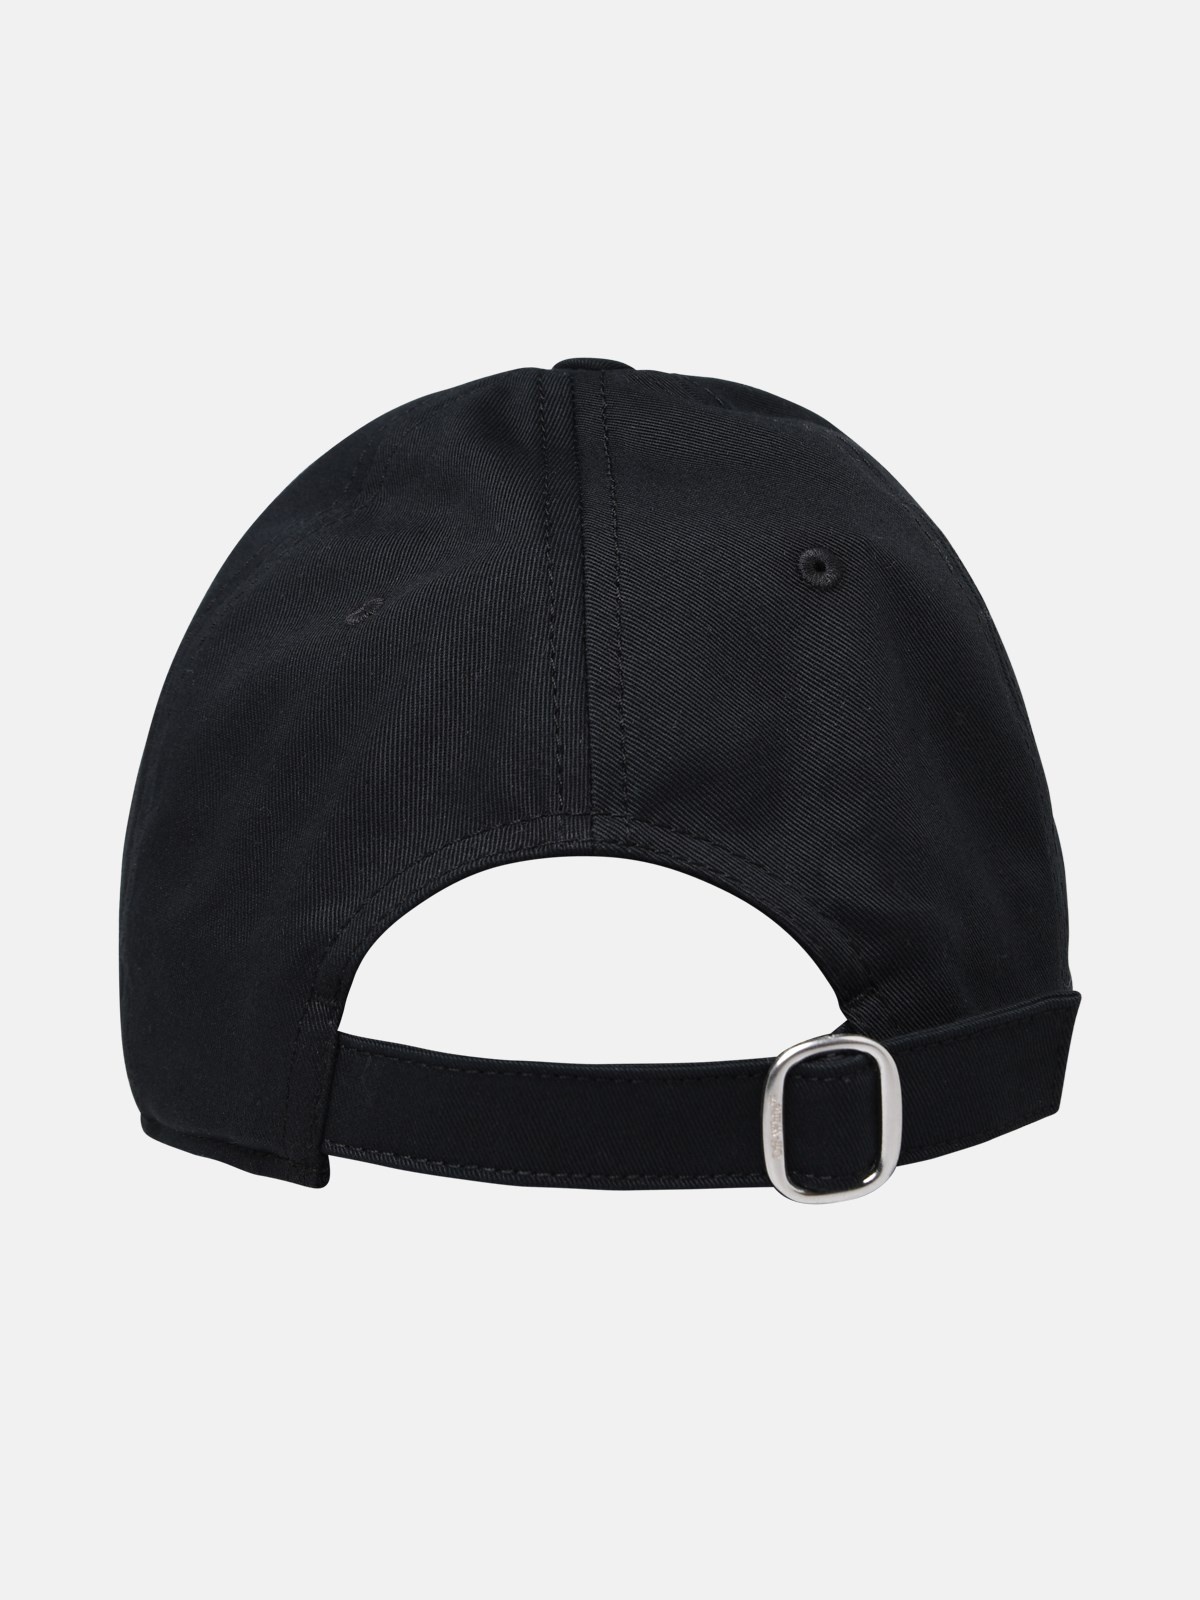 Black cotton Drill hat - 3